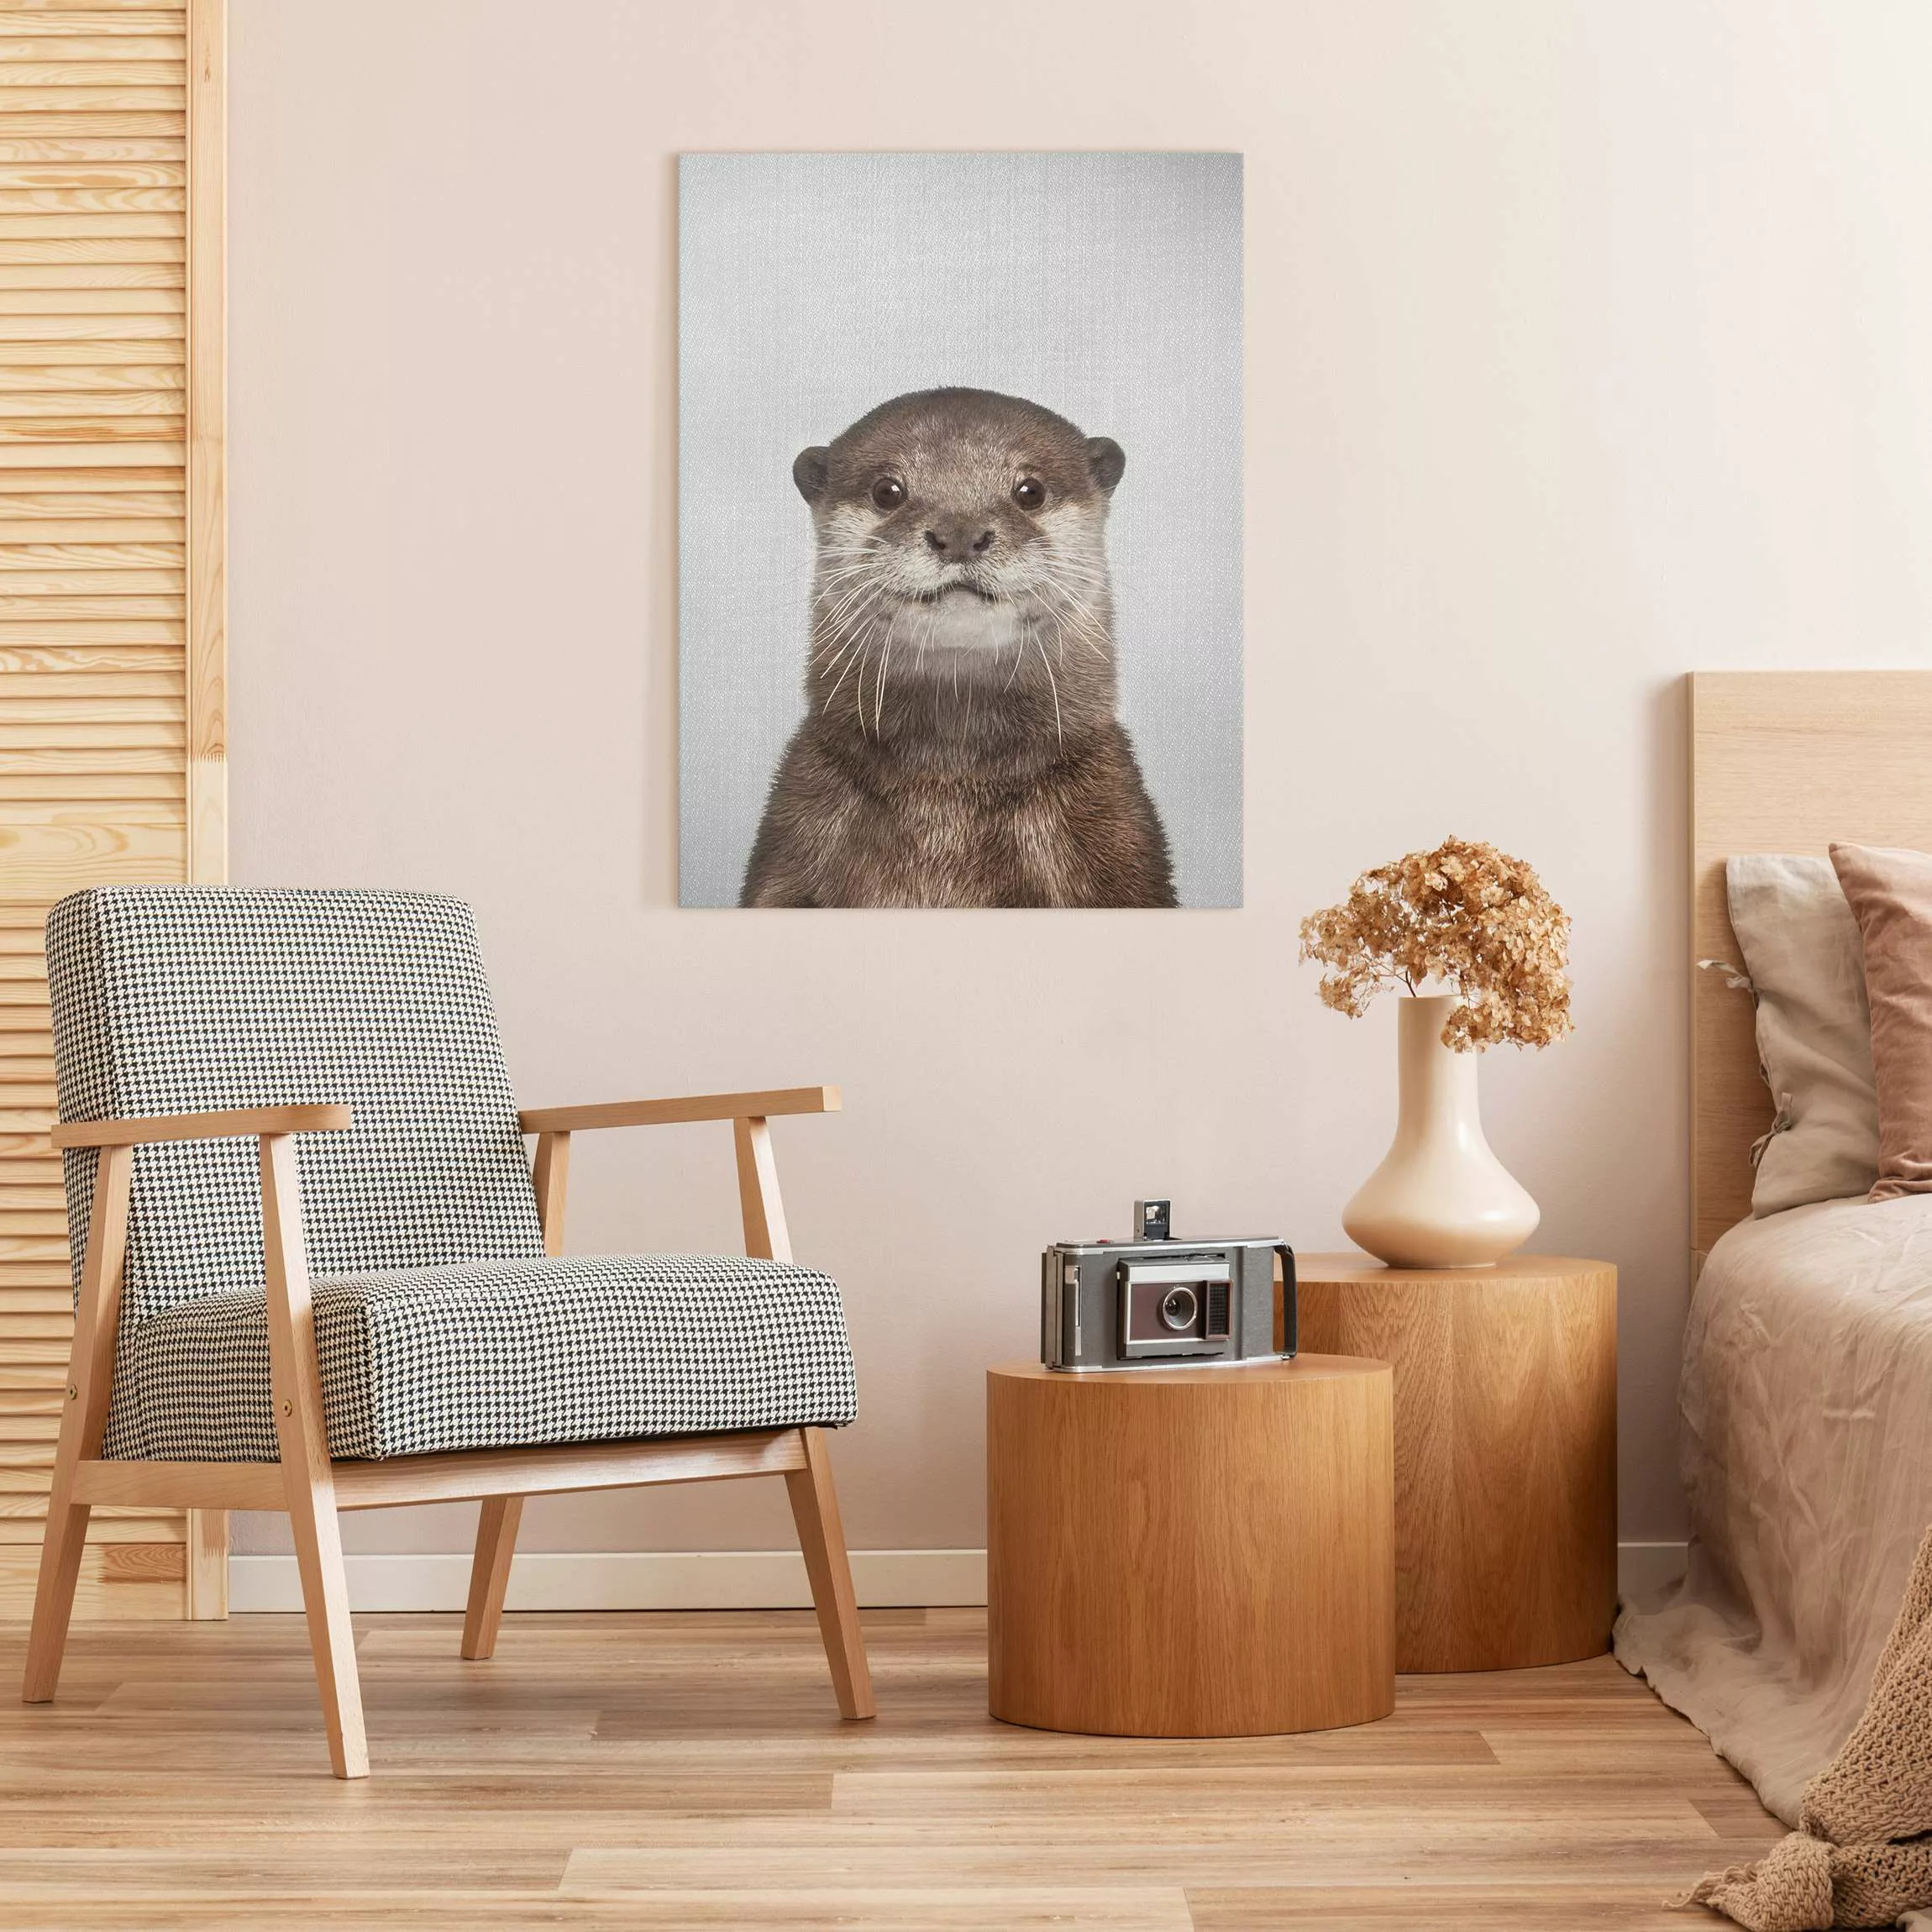 Leinwandbild Otter Oswald günstig online kaufen